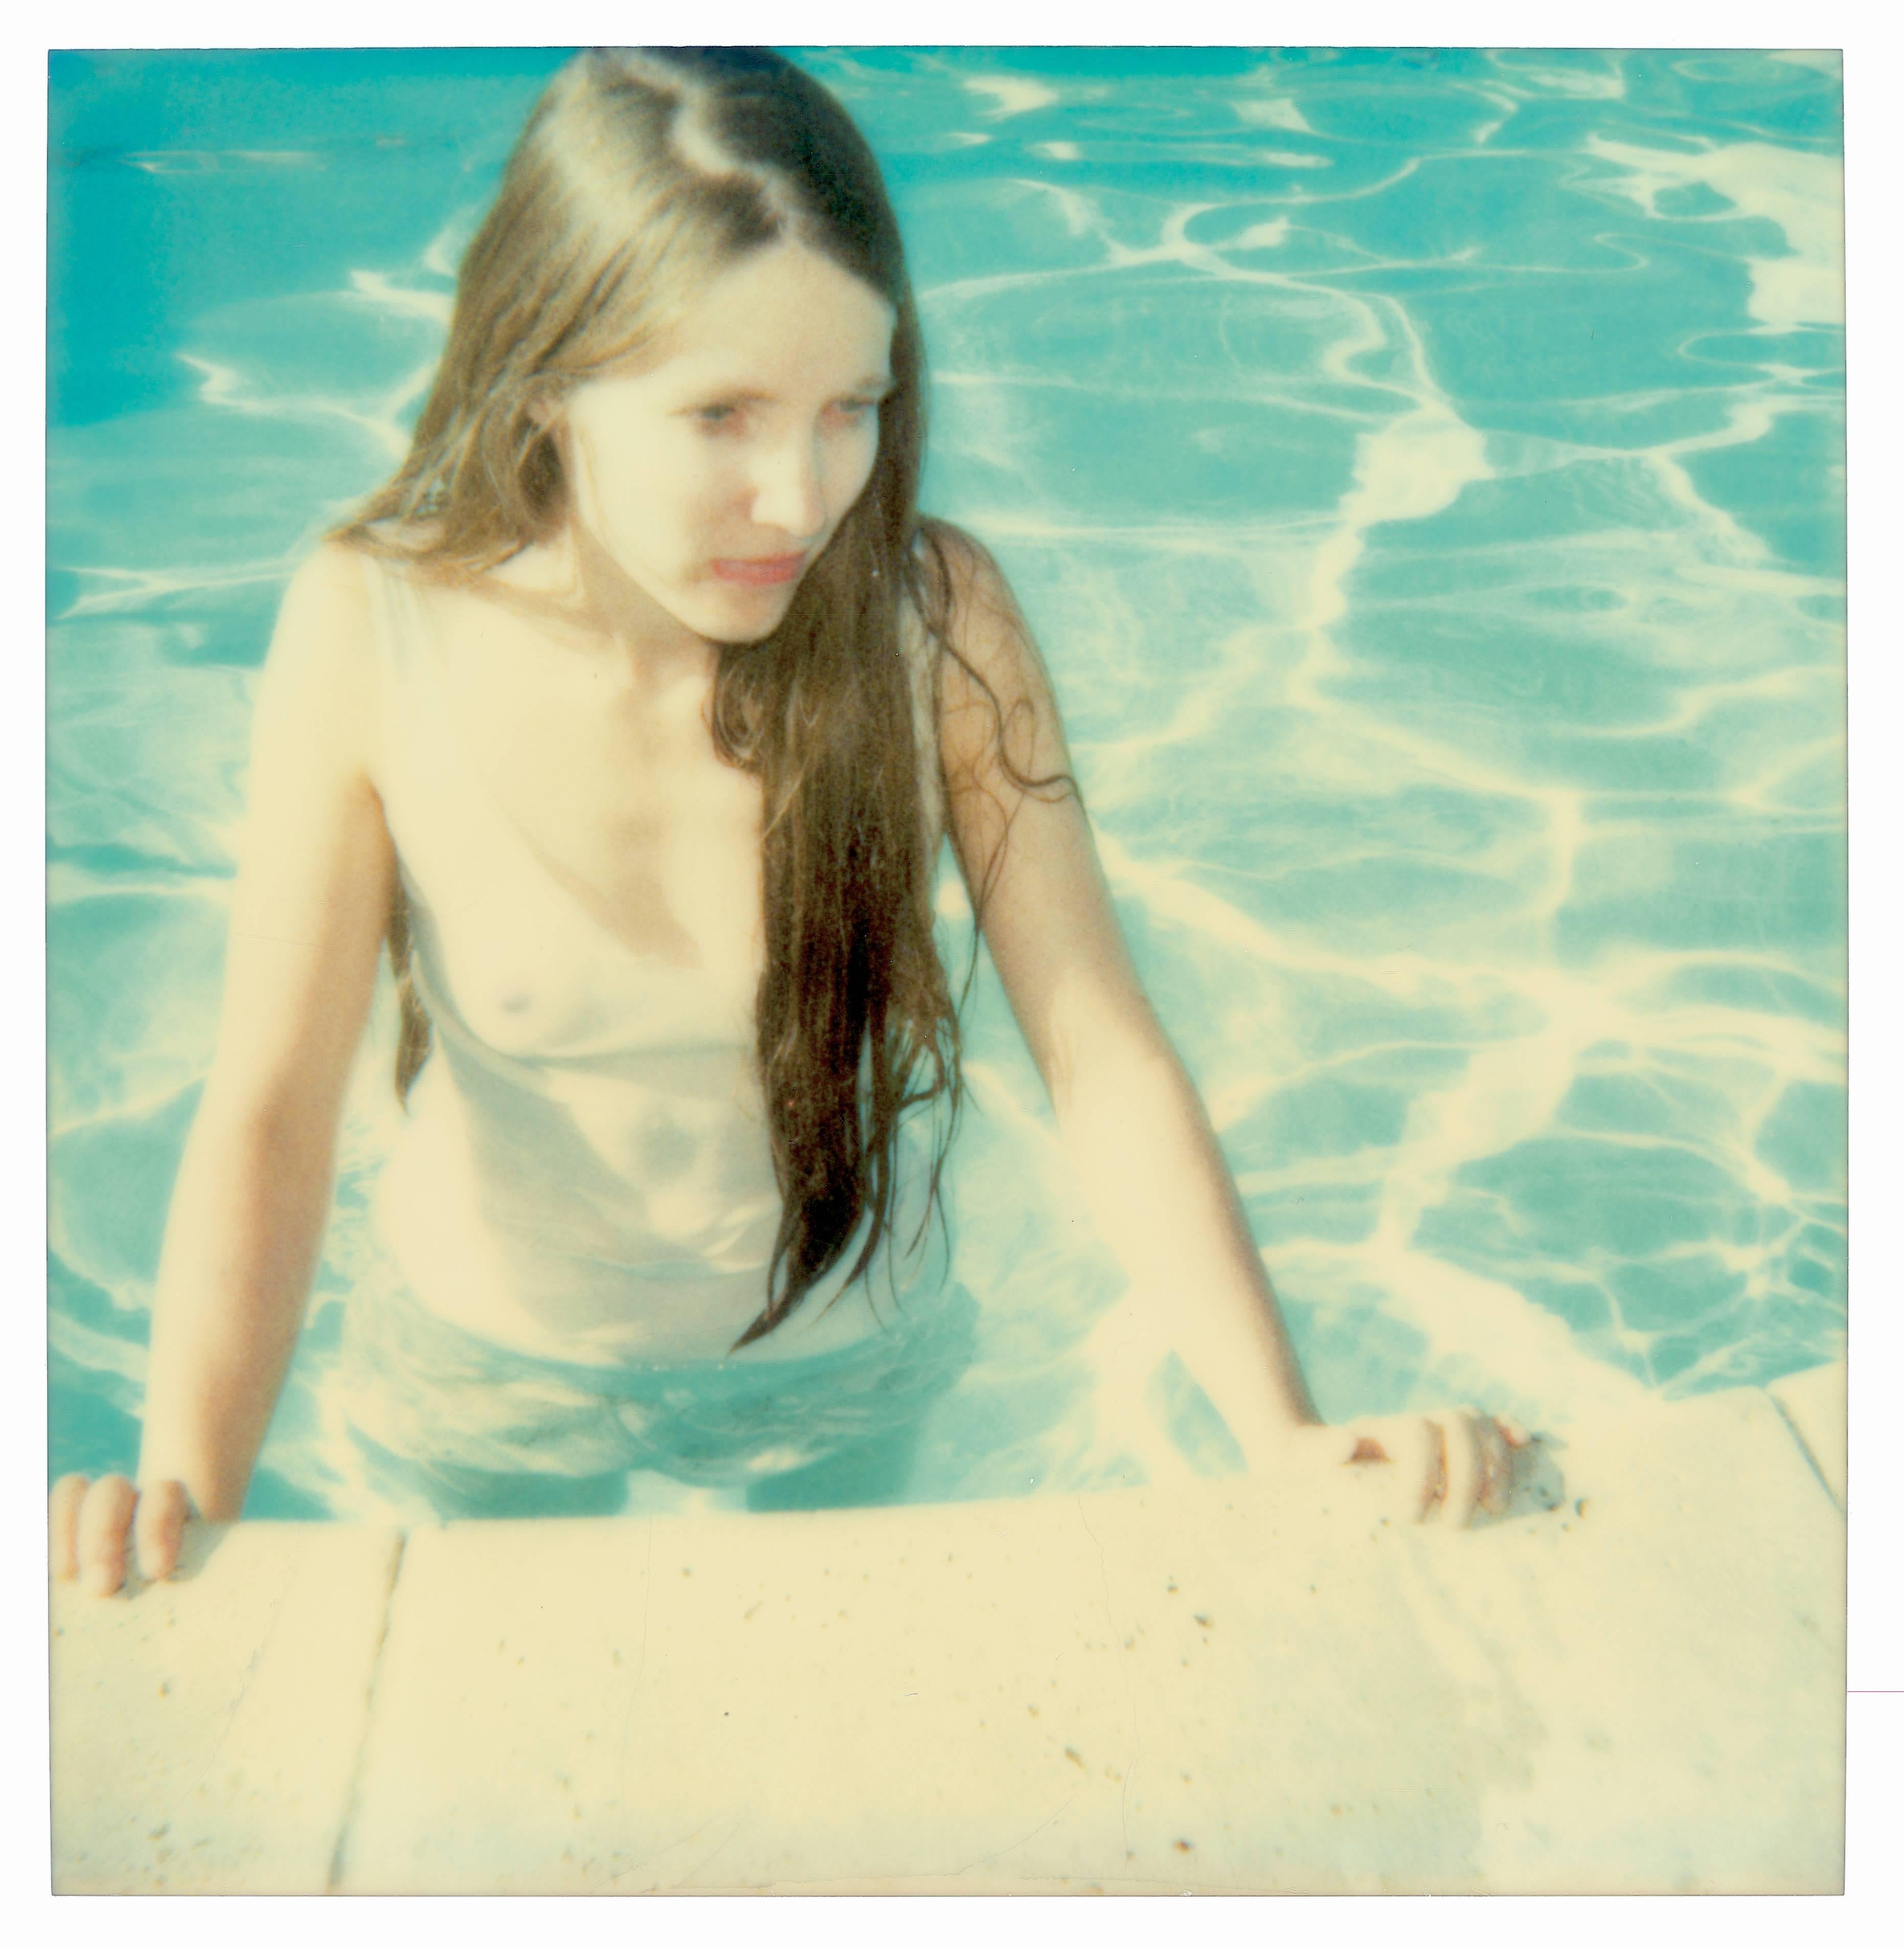 Poolside (29 Palms, CA) - mounted - Contemporary, 21st Century, Polaroid, Woman